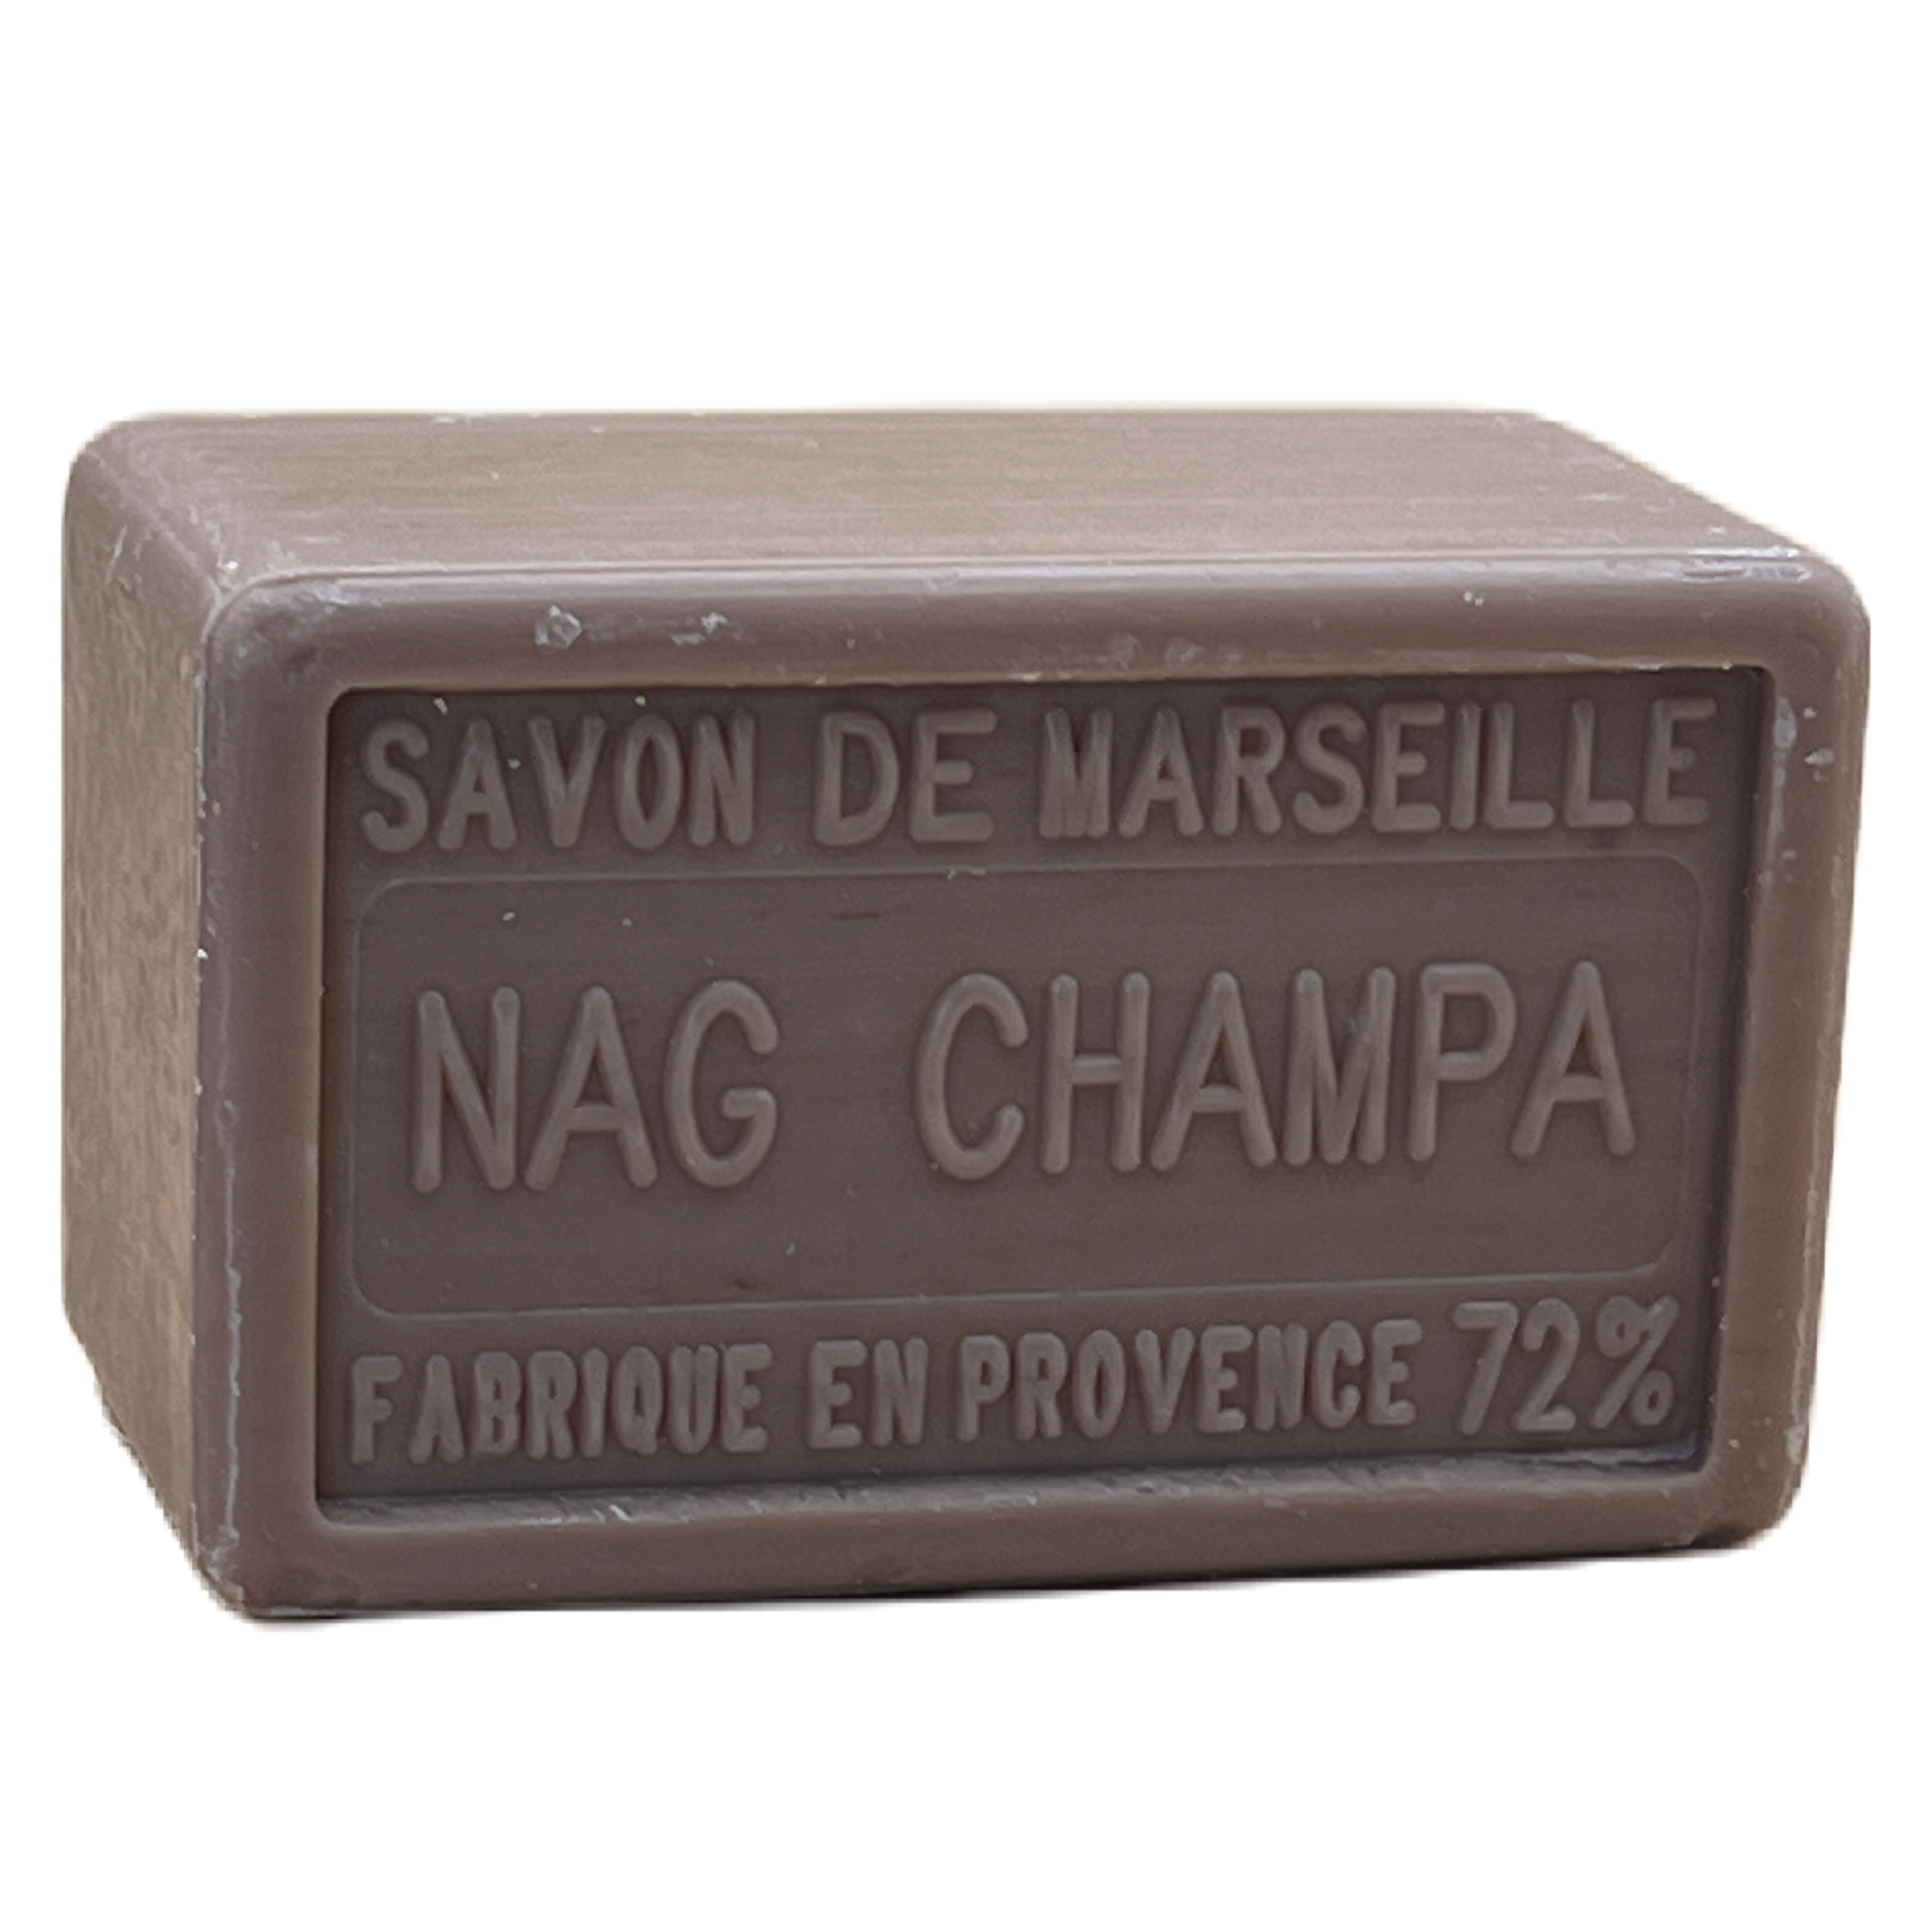 Nag Champa -Beard Balm - Old Town Soap Co.